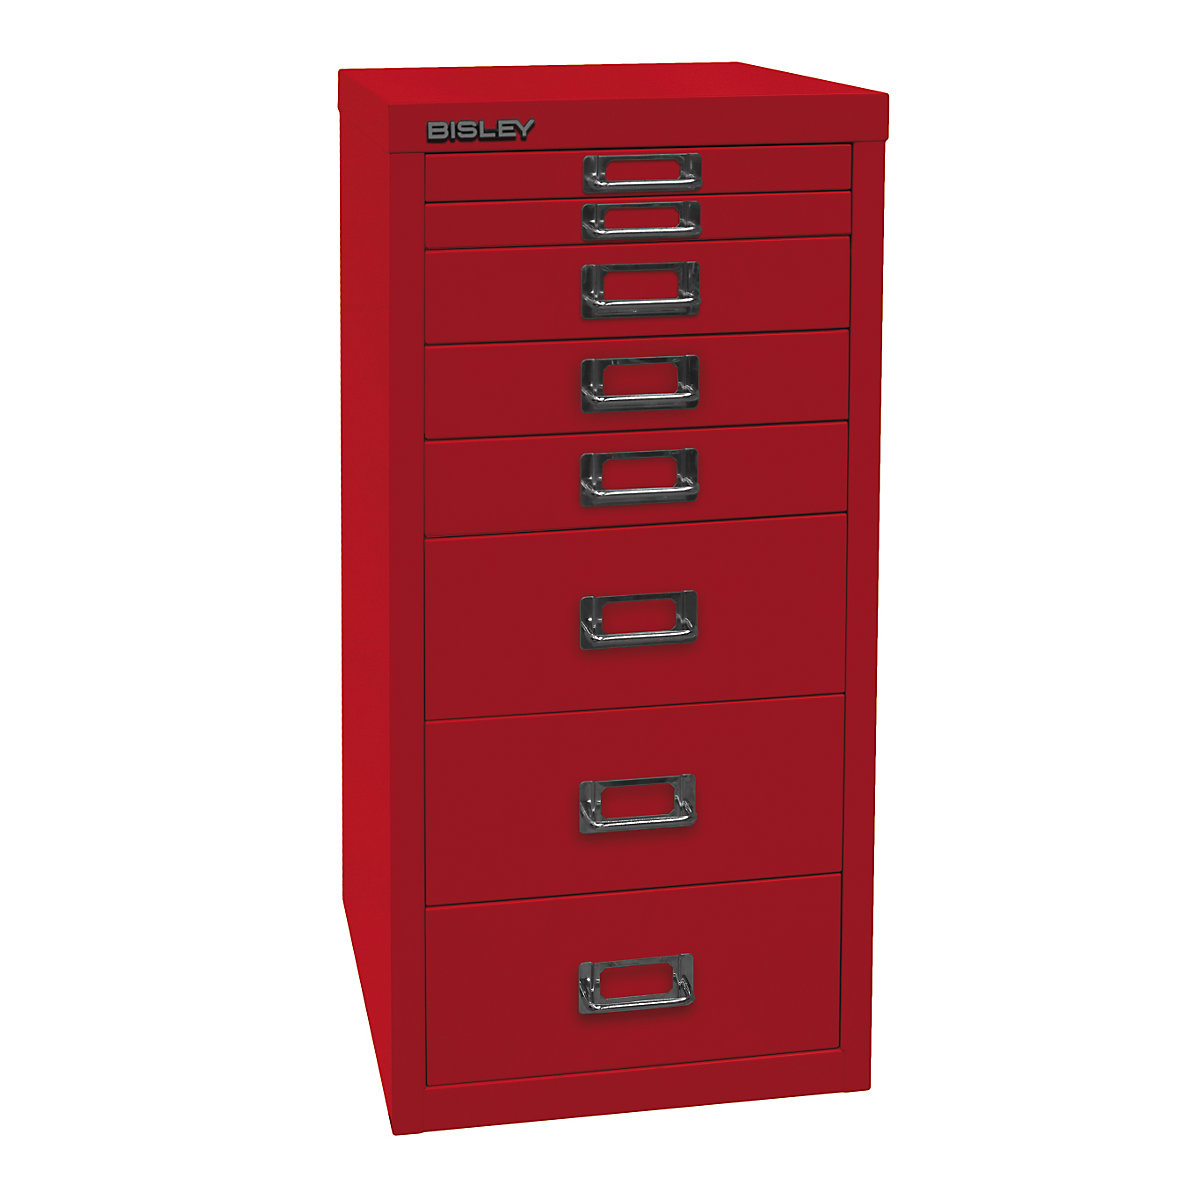 MultiDrawer™ 29 series – BISLEY, A4, 8 drawers, cardinal red-4